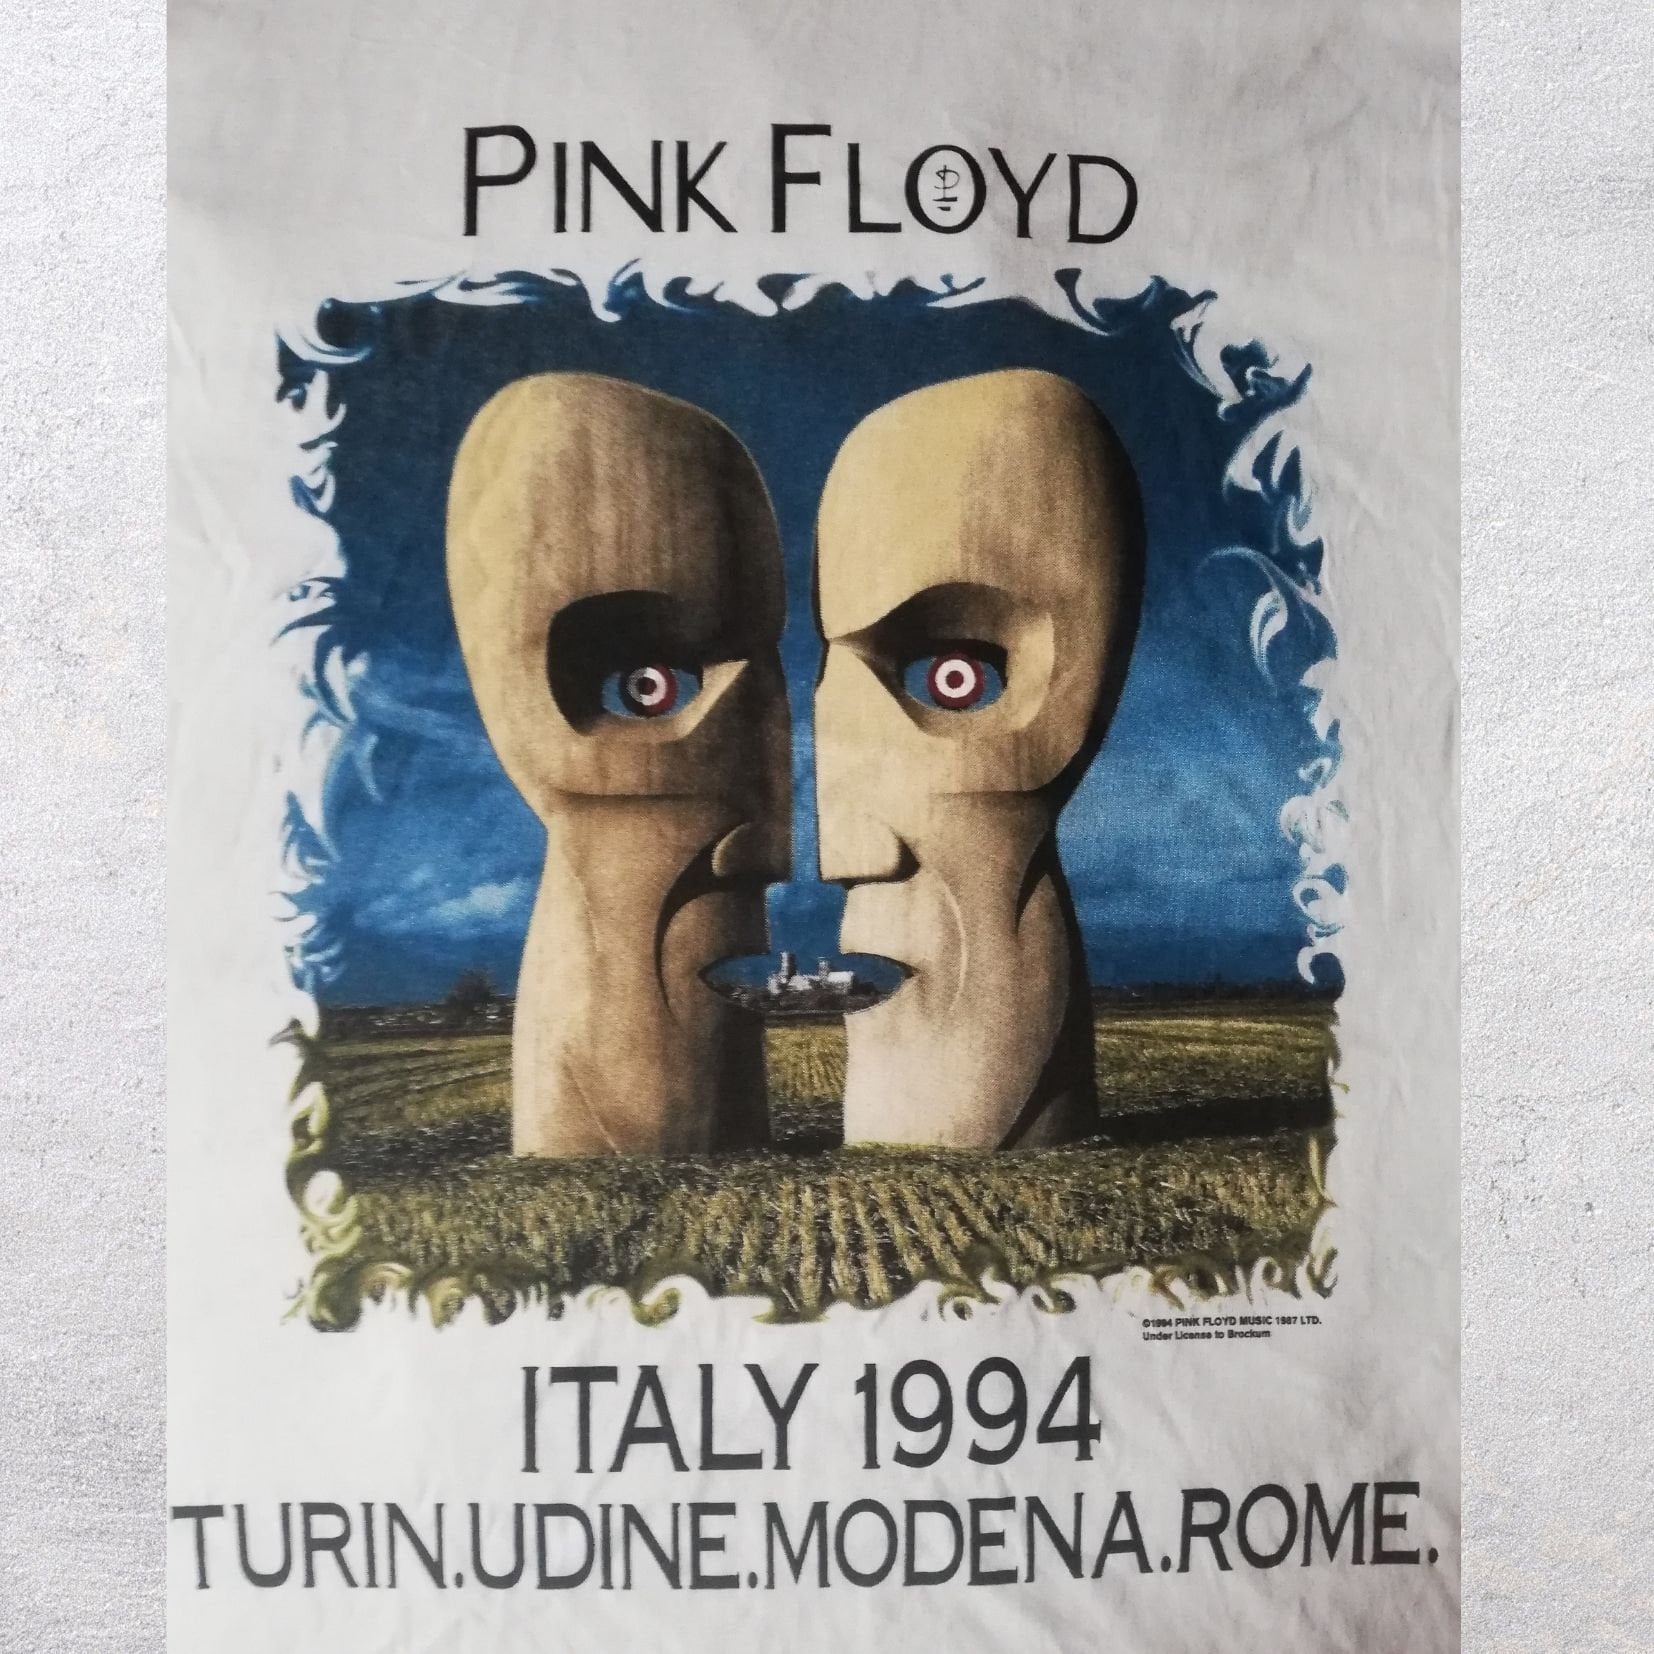 Backstage Modena - Exclusive Vintage